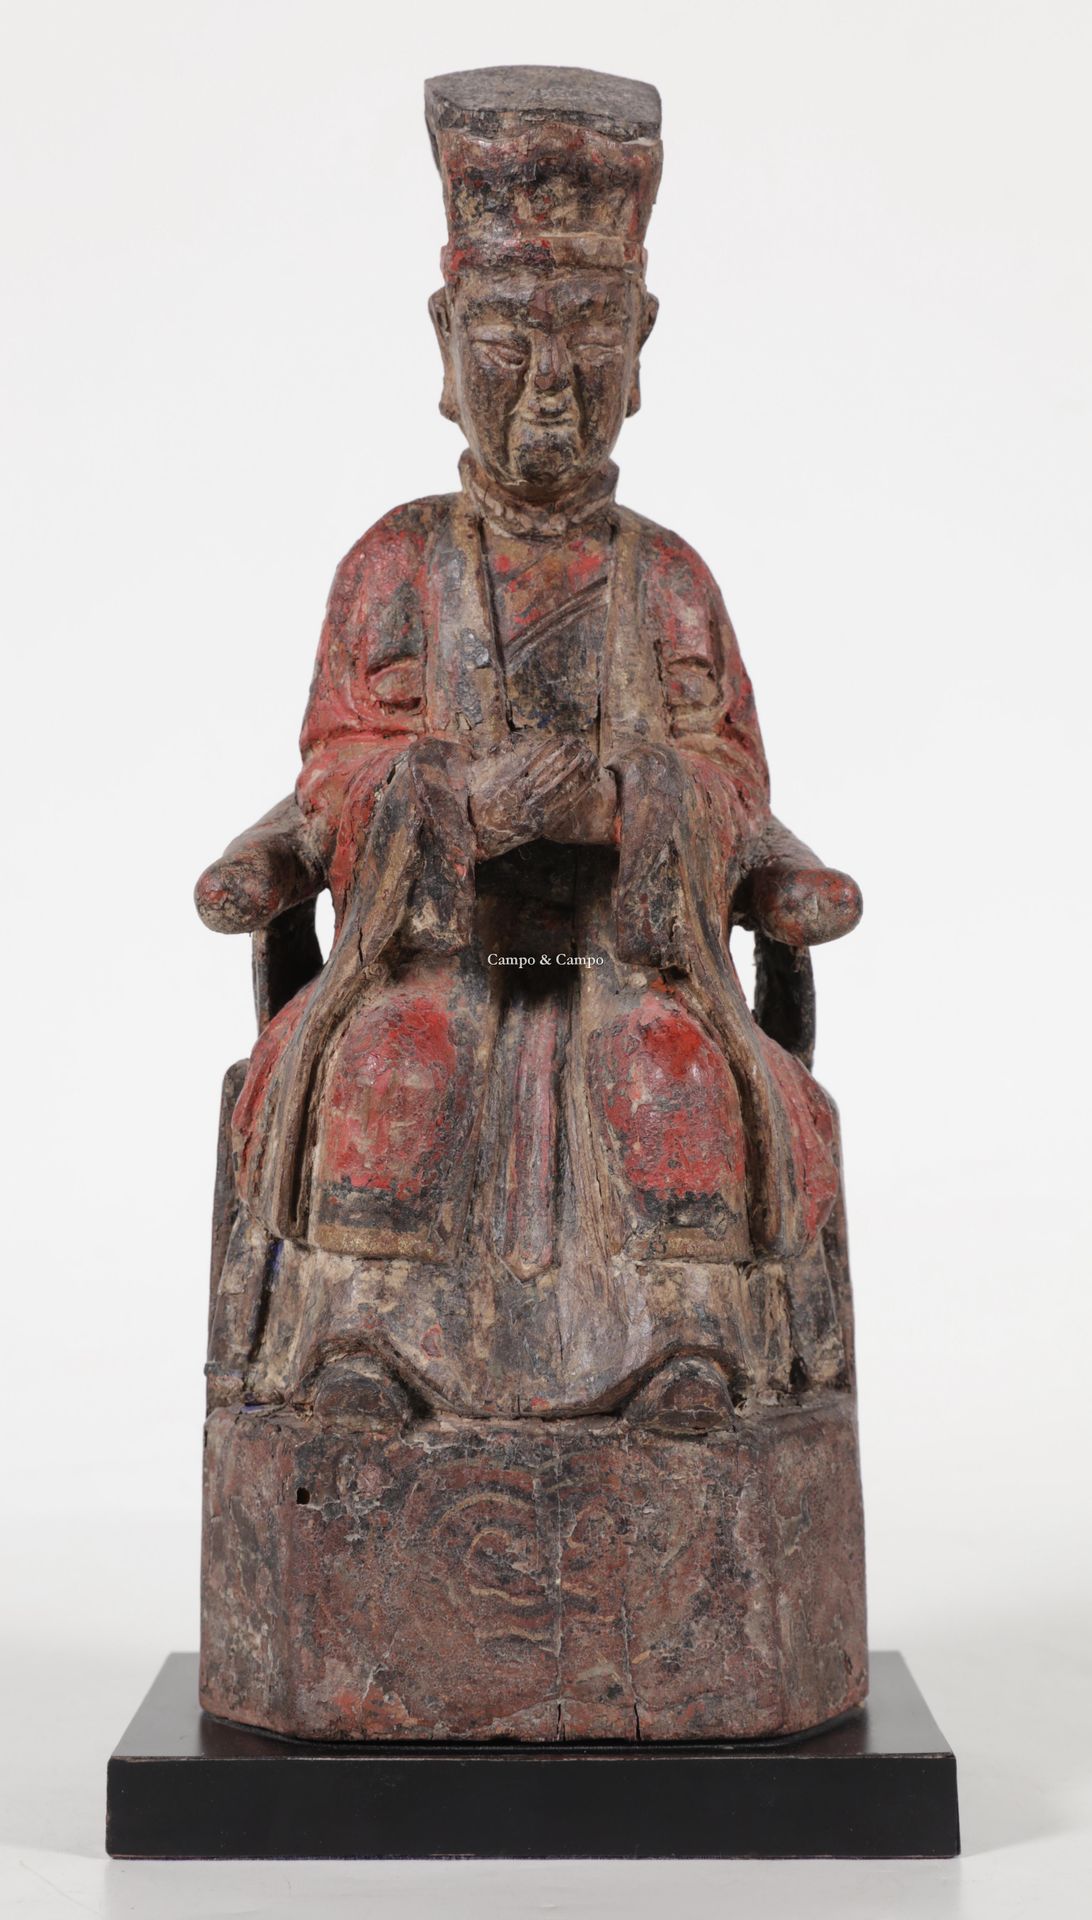 VARIA 1644-1912 Dio seduto, legno policromo
Zittende God van polychroom beschild&hellip;